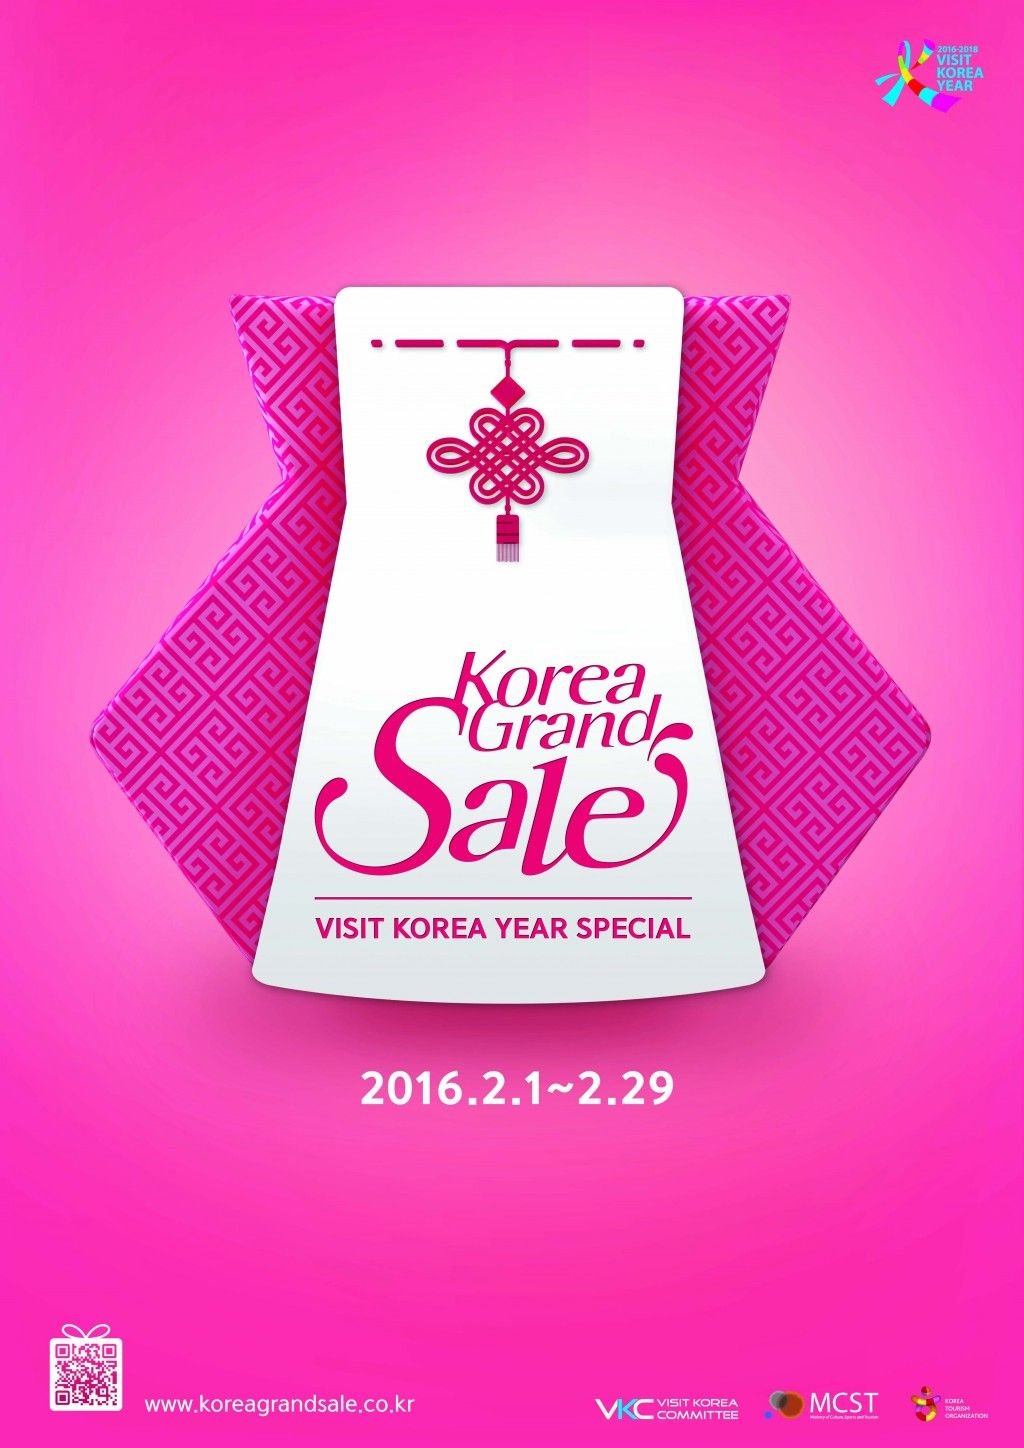 “Korea Grand Sale” – Responding to the year of tourism in Korea